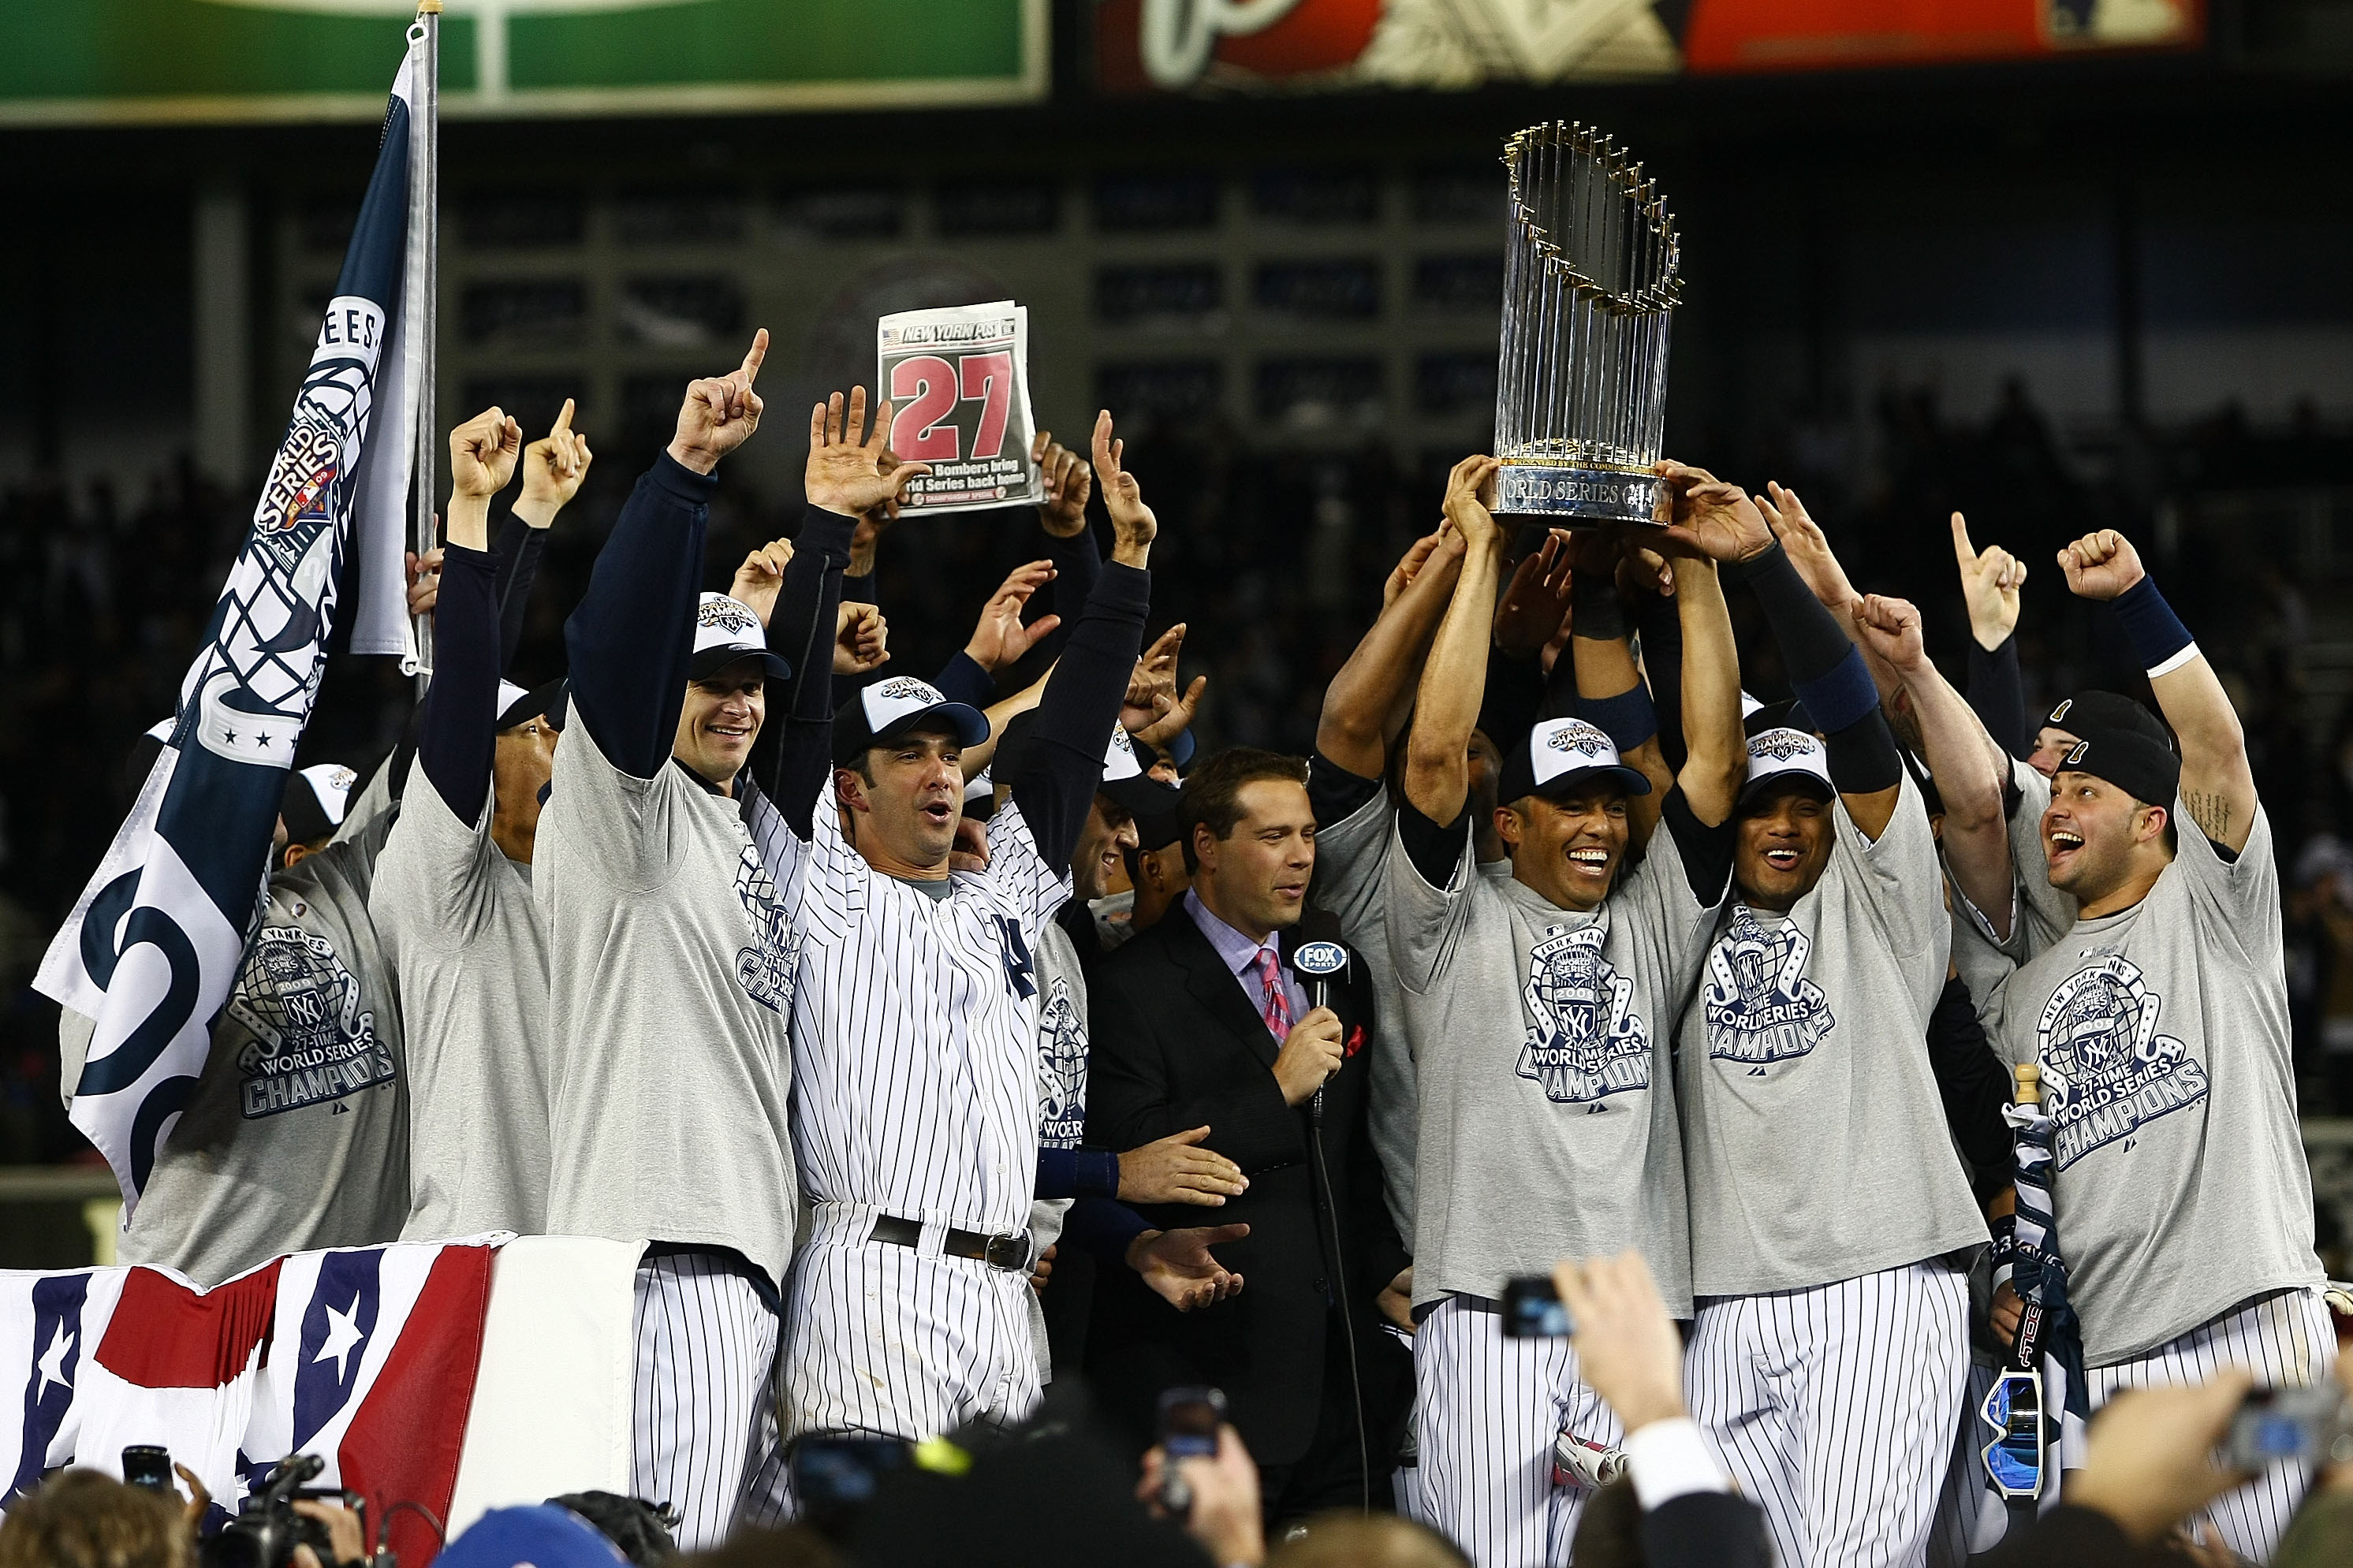 Yankees win 27th World Series, Sports